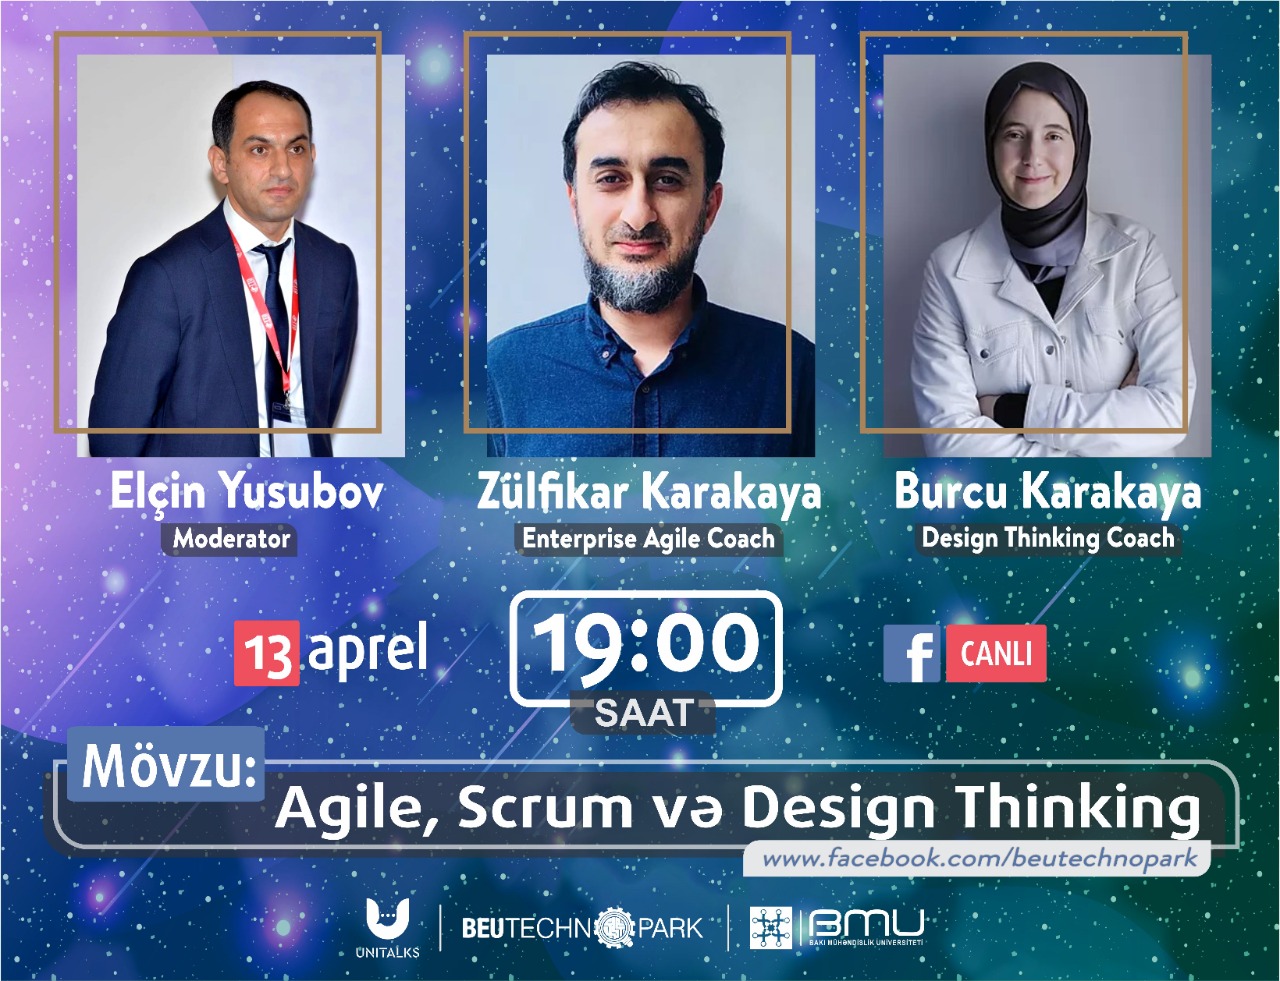 The next UniTalks meeting on “Agile, Scrum və Design Thinking”